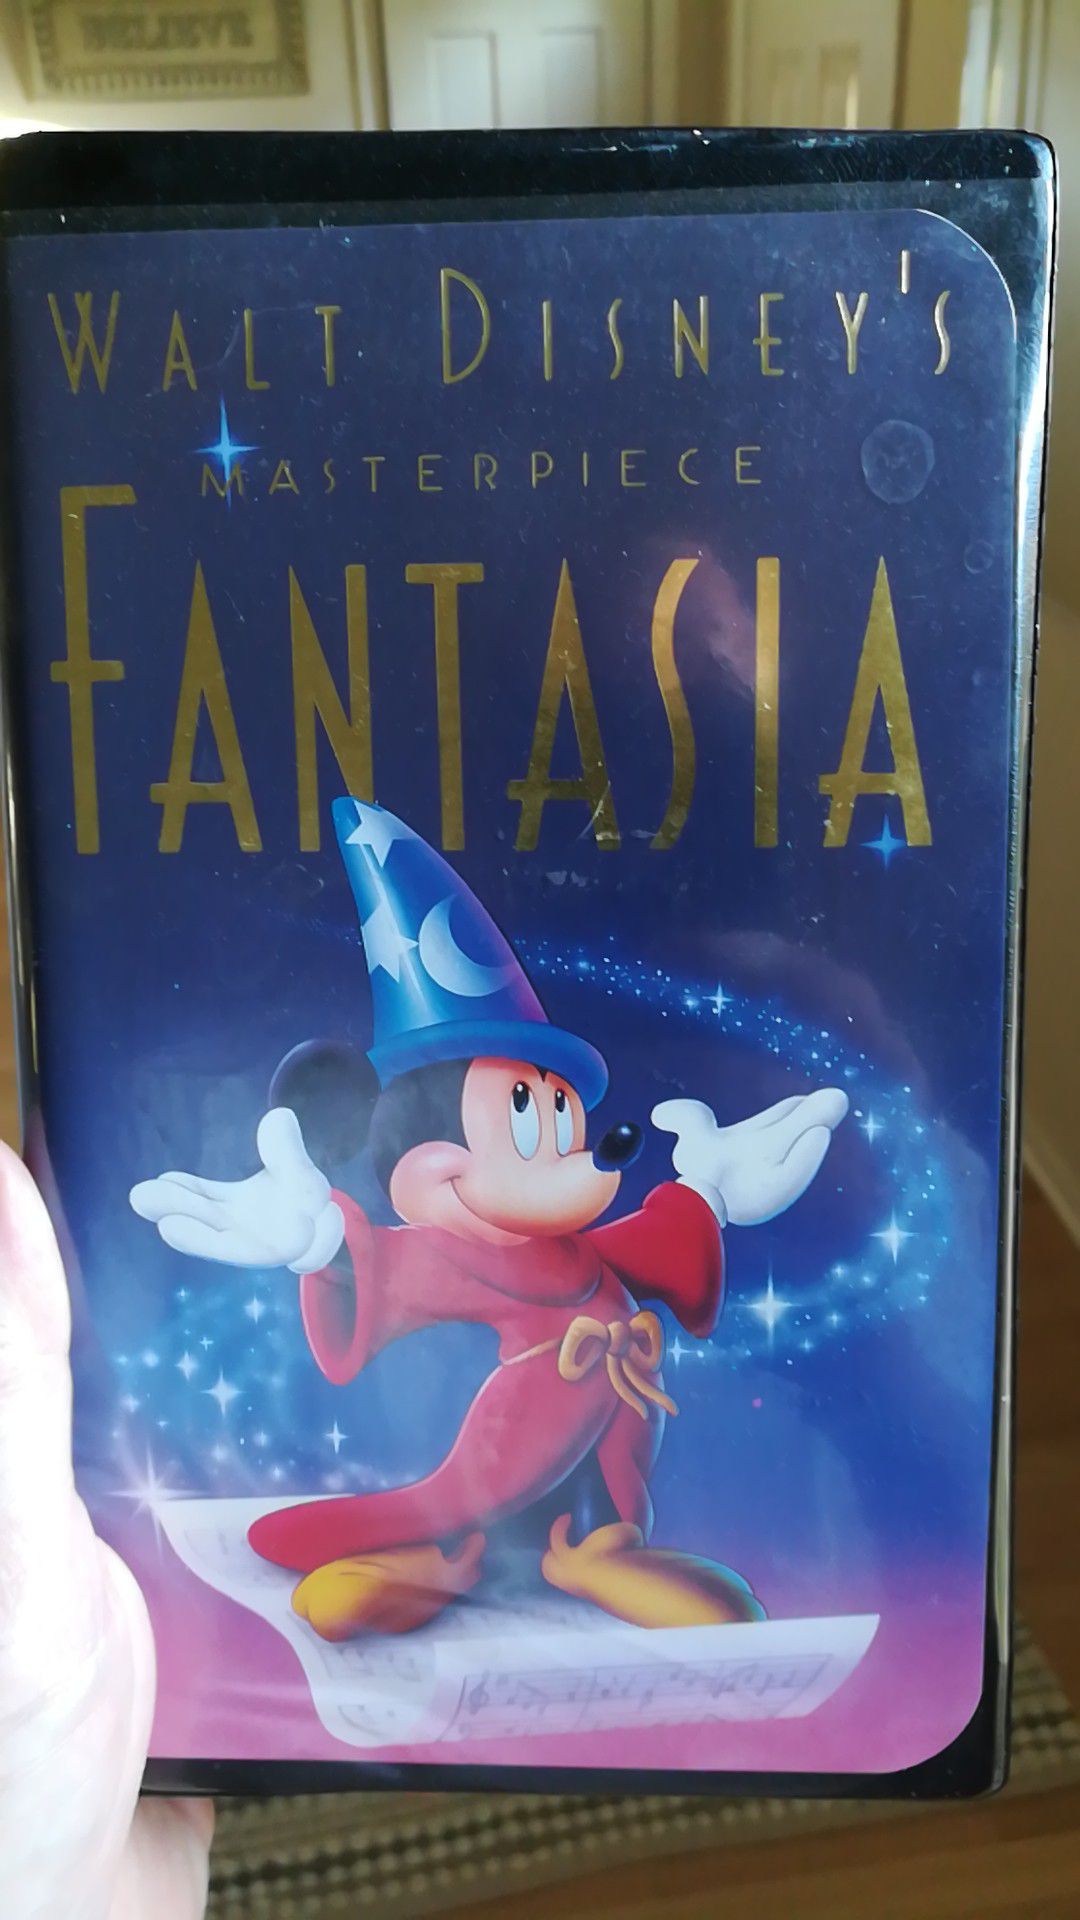 Disney's fantasia